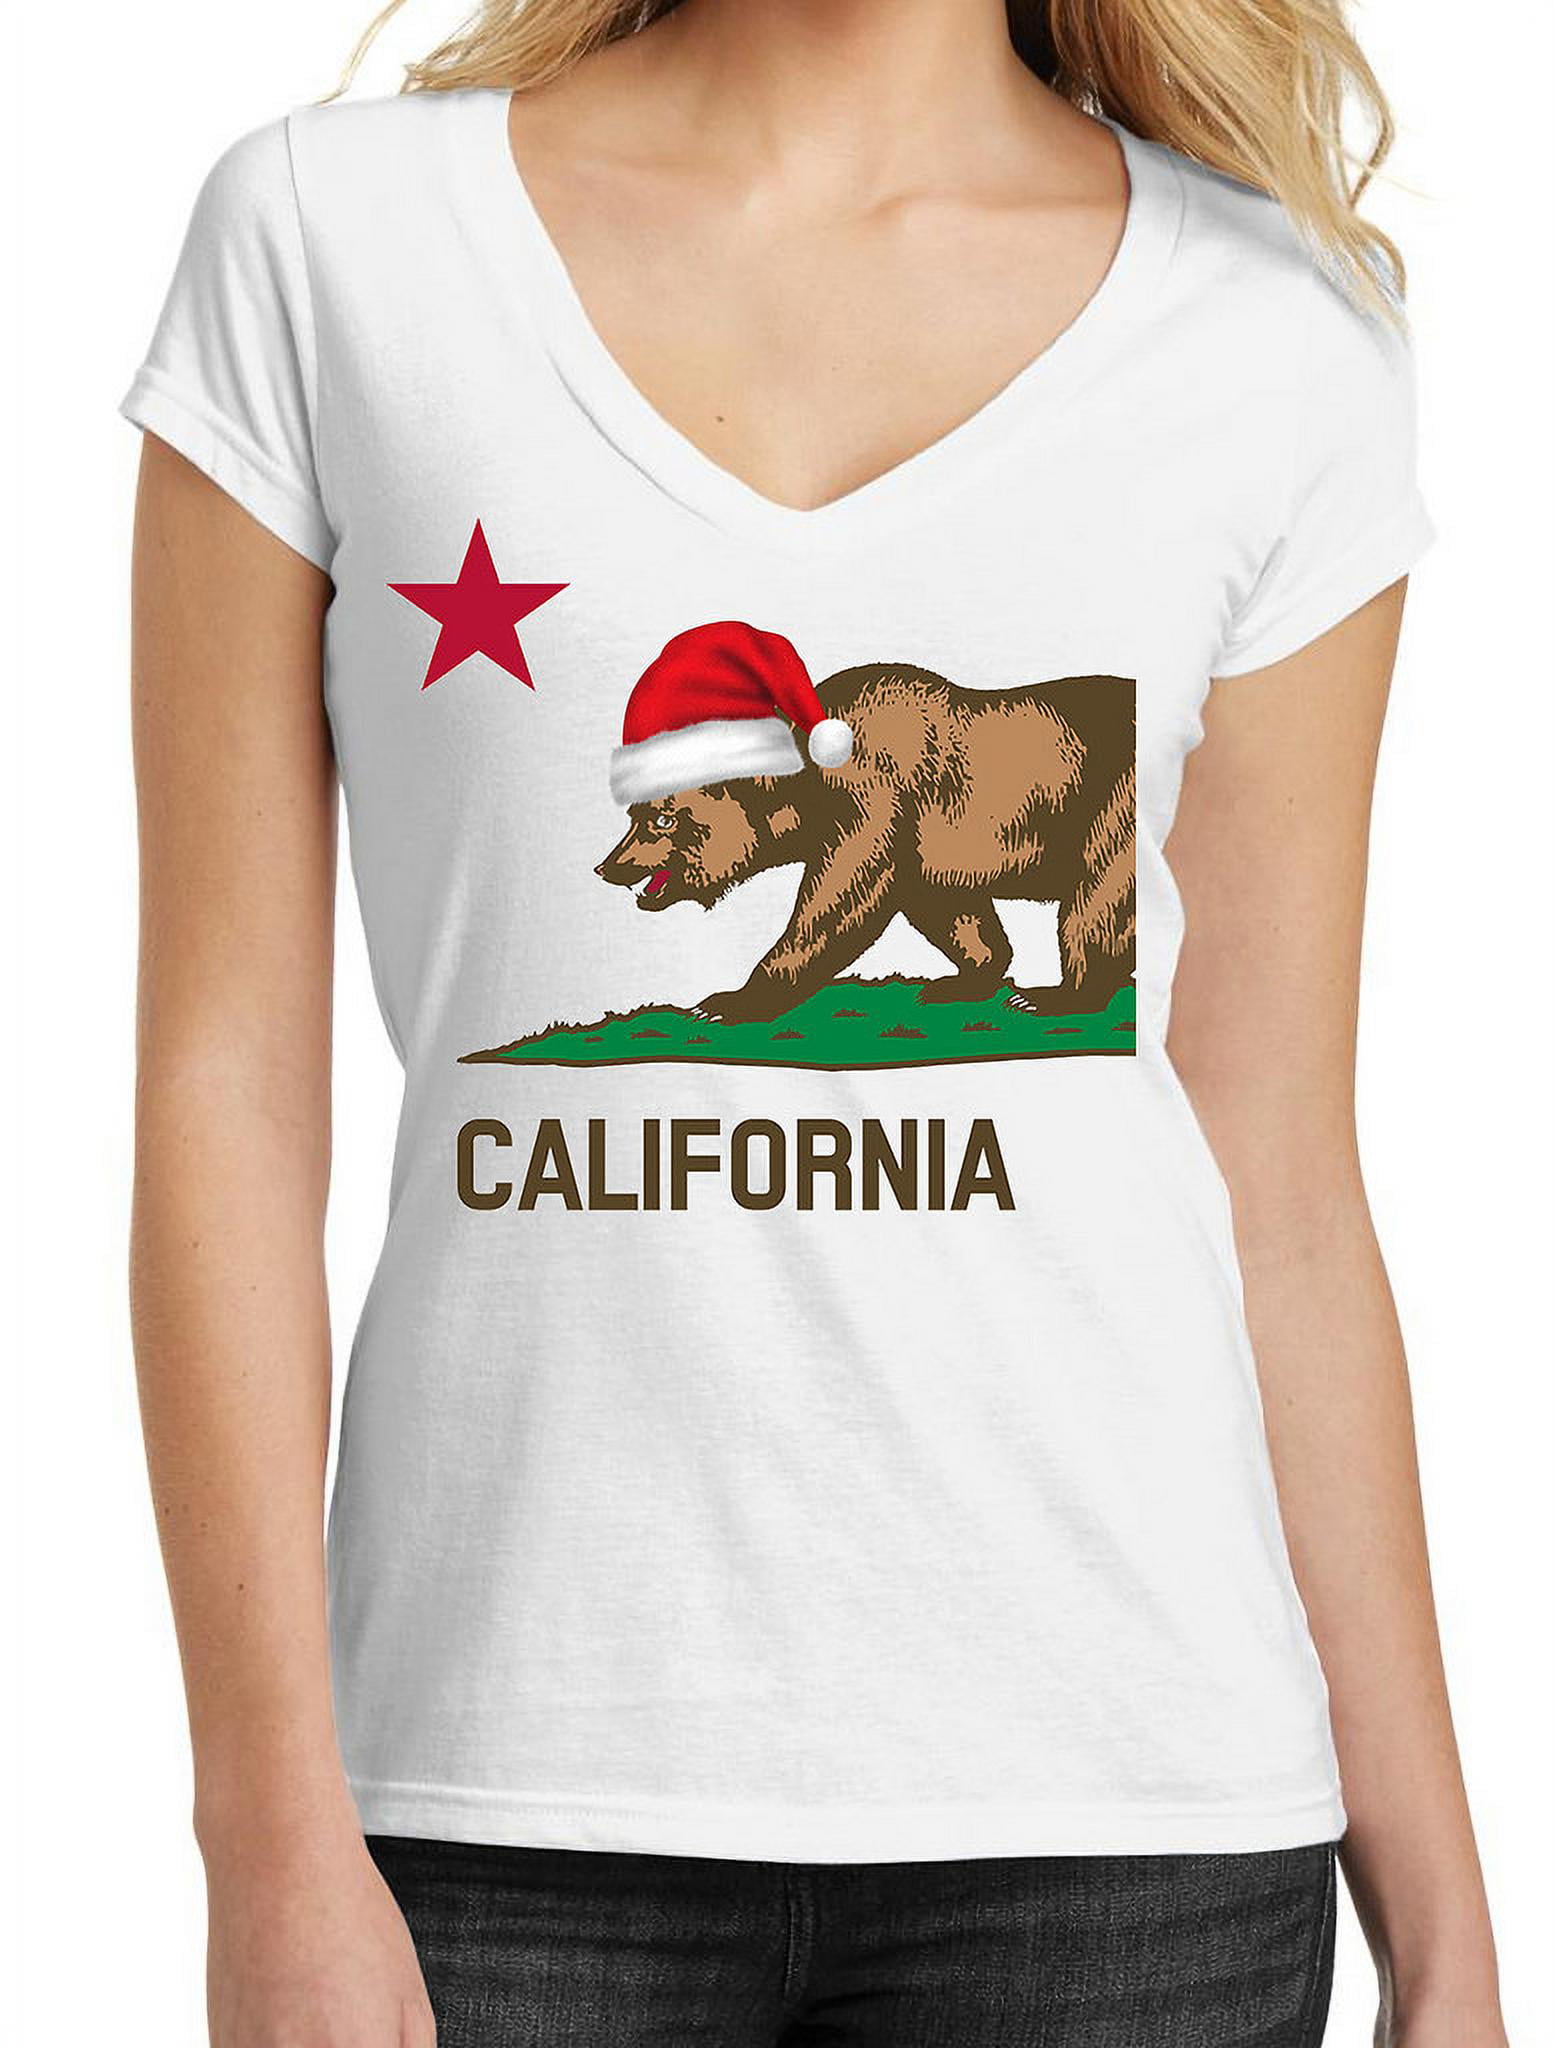 CALIFORNIA REPUBLIC V-Neck T-shirt Cali CA Tee Womens JUNIORS S-XL White New 